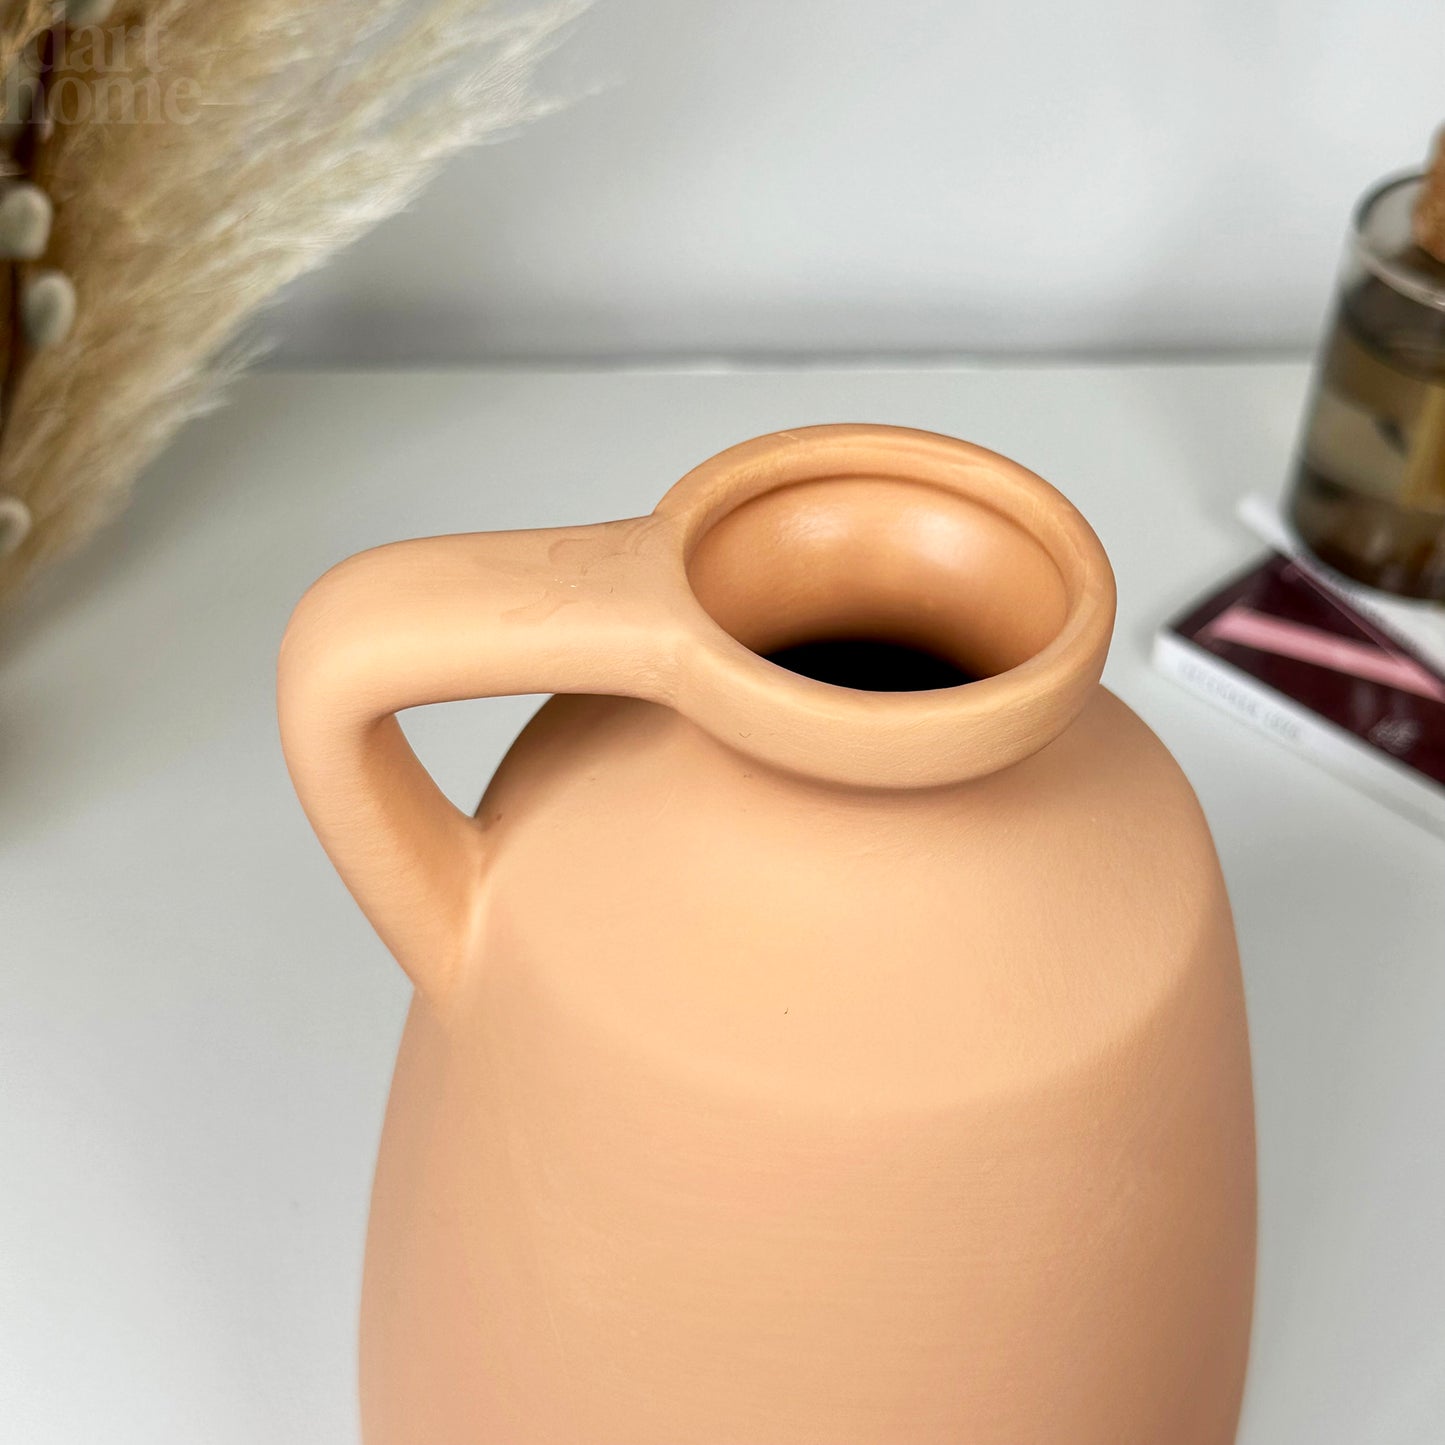 Terracotta Bottle Vase With Handle